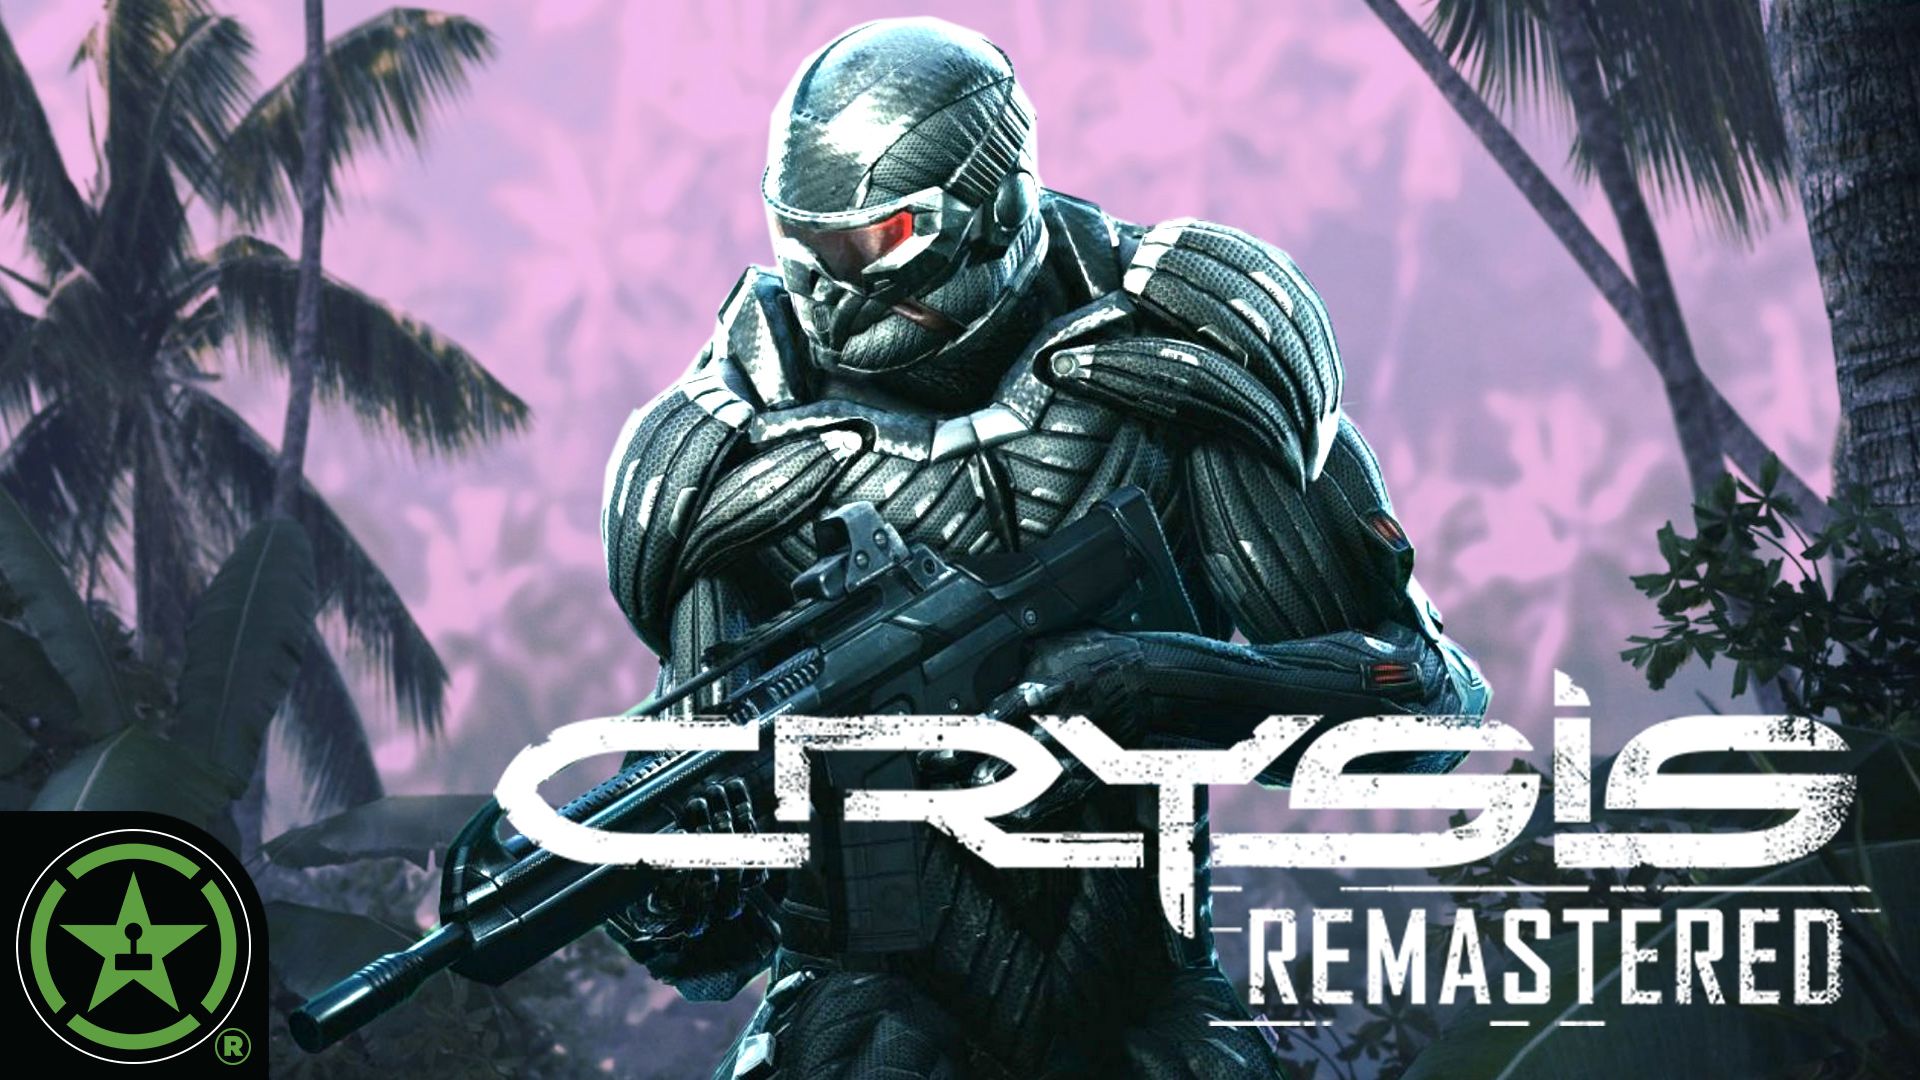 Crysis Remastered Trilogy. Crysis Warhead заставка. Crysis 2 Remastered обложка. Crysis Warhead картинки. Crysis remastered достижения